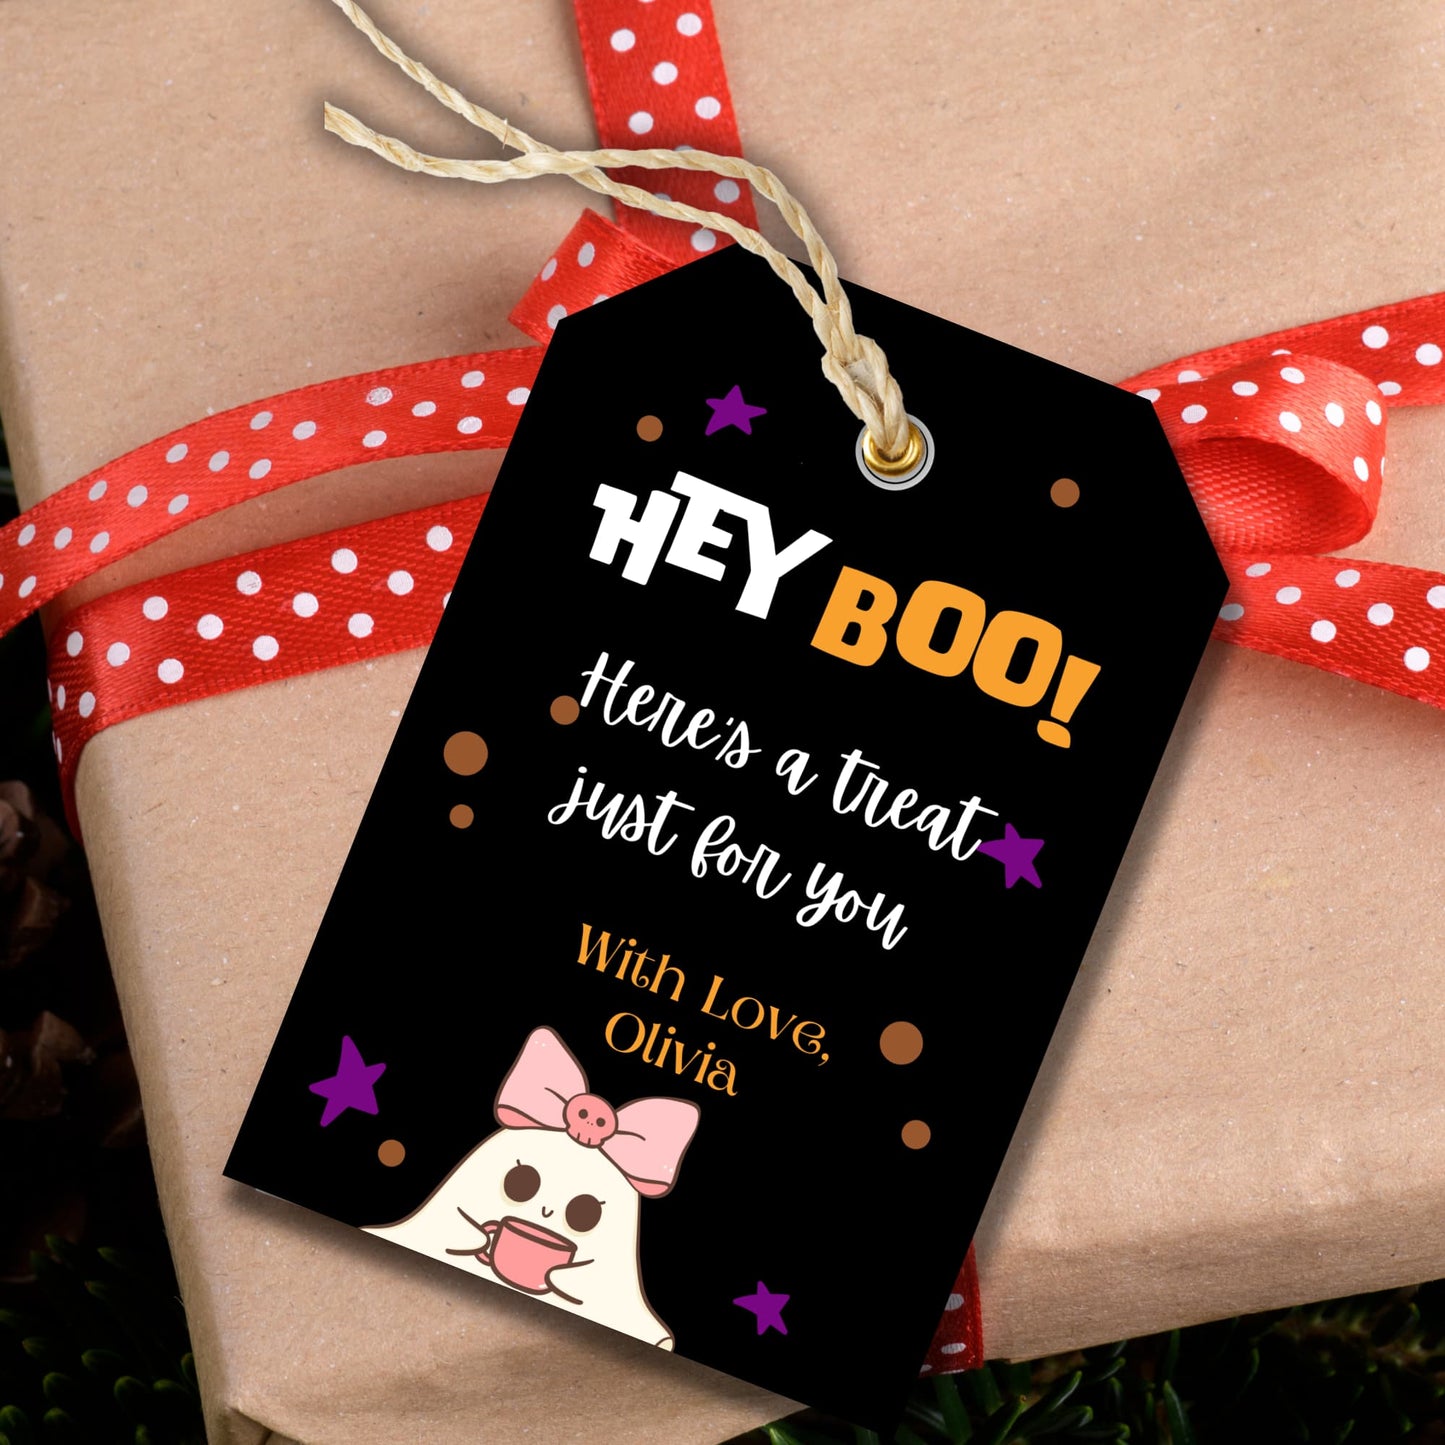  "Hey Boo" Halloween printable tag showcased on a brown gift box.